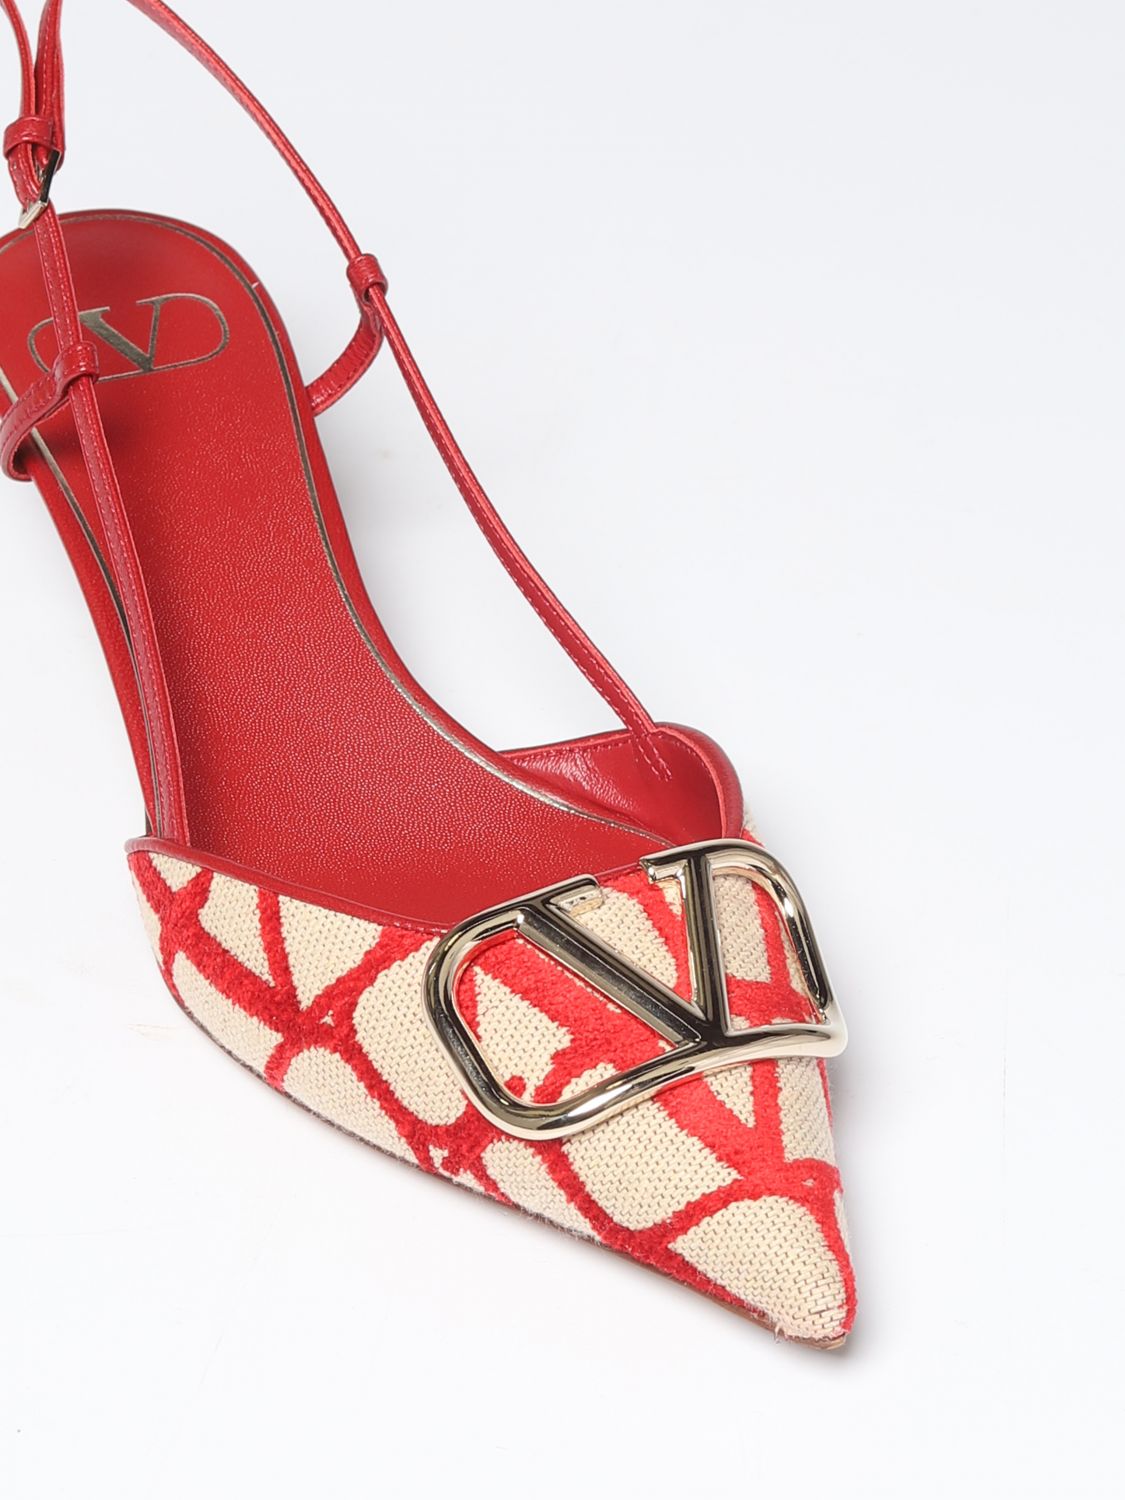 VALENTINO GARAVANI: high heel shoes for woman - Red | Valentino ...